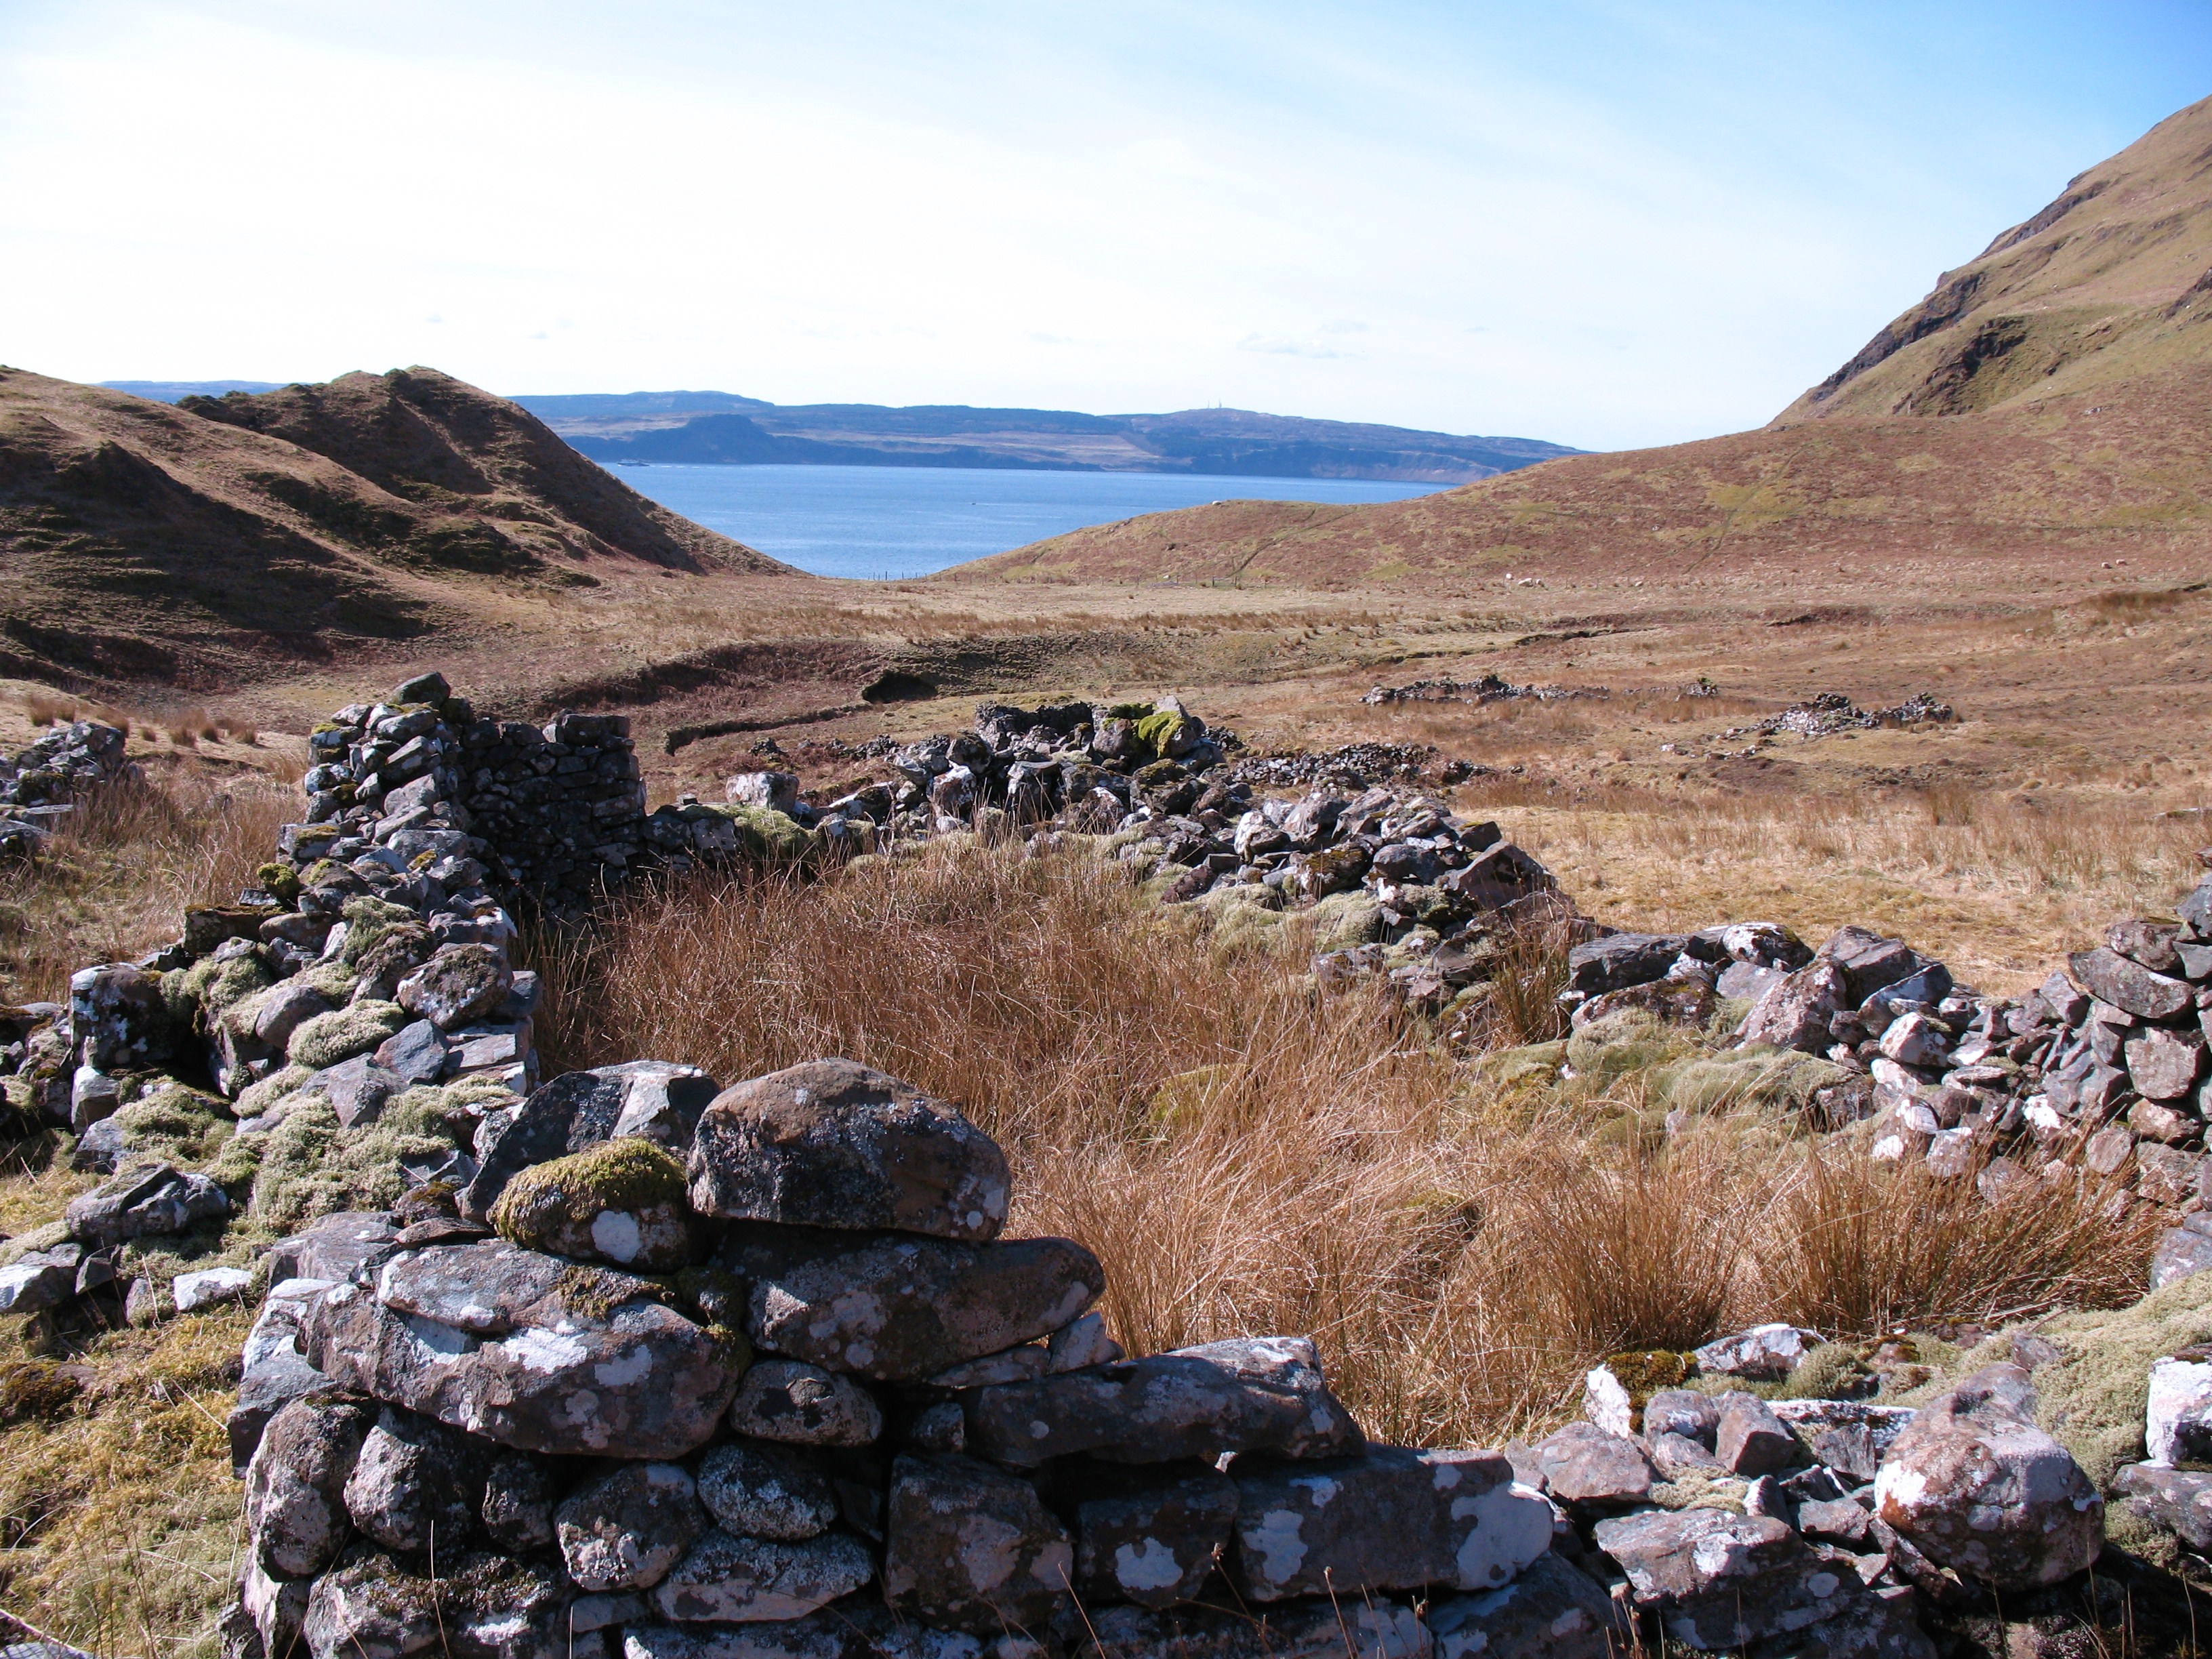 Scottish Highlands – Travel guide at Wikivoyage